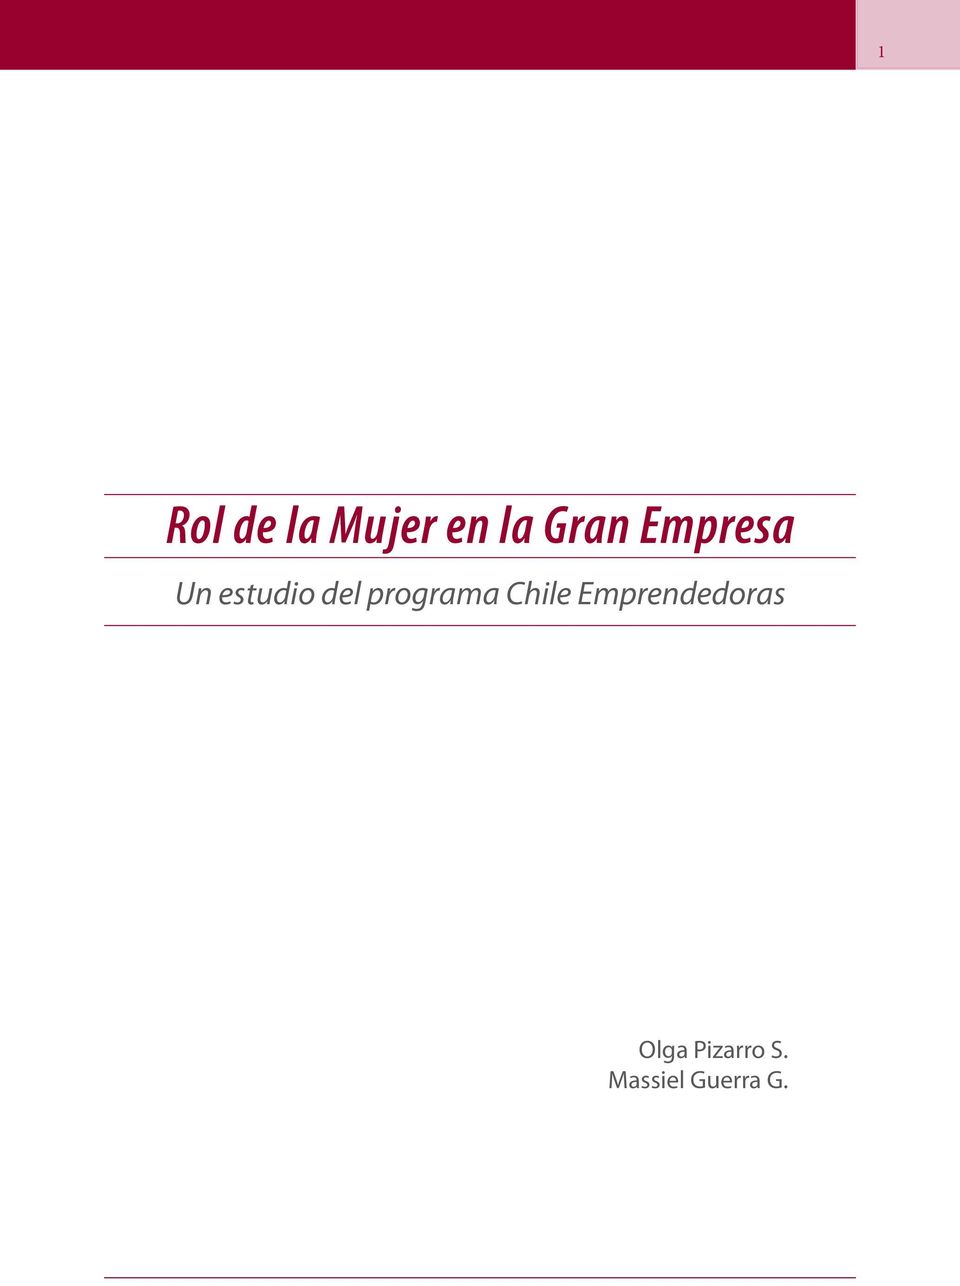 programa Chile Emprendedoras